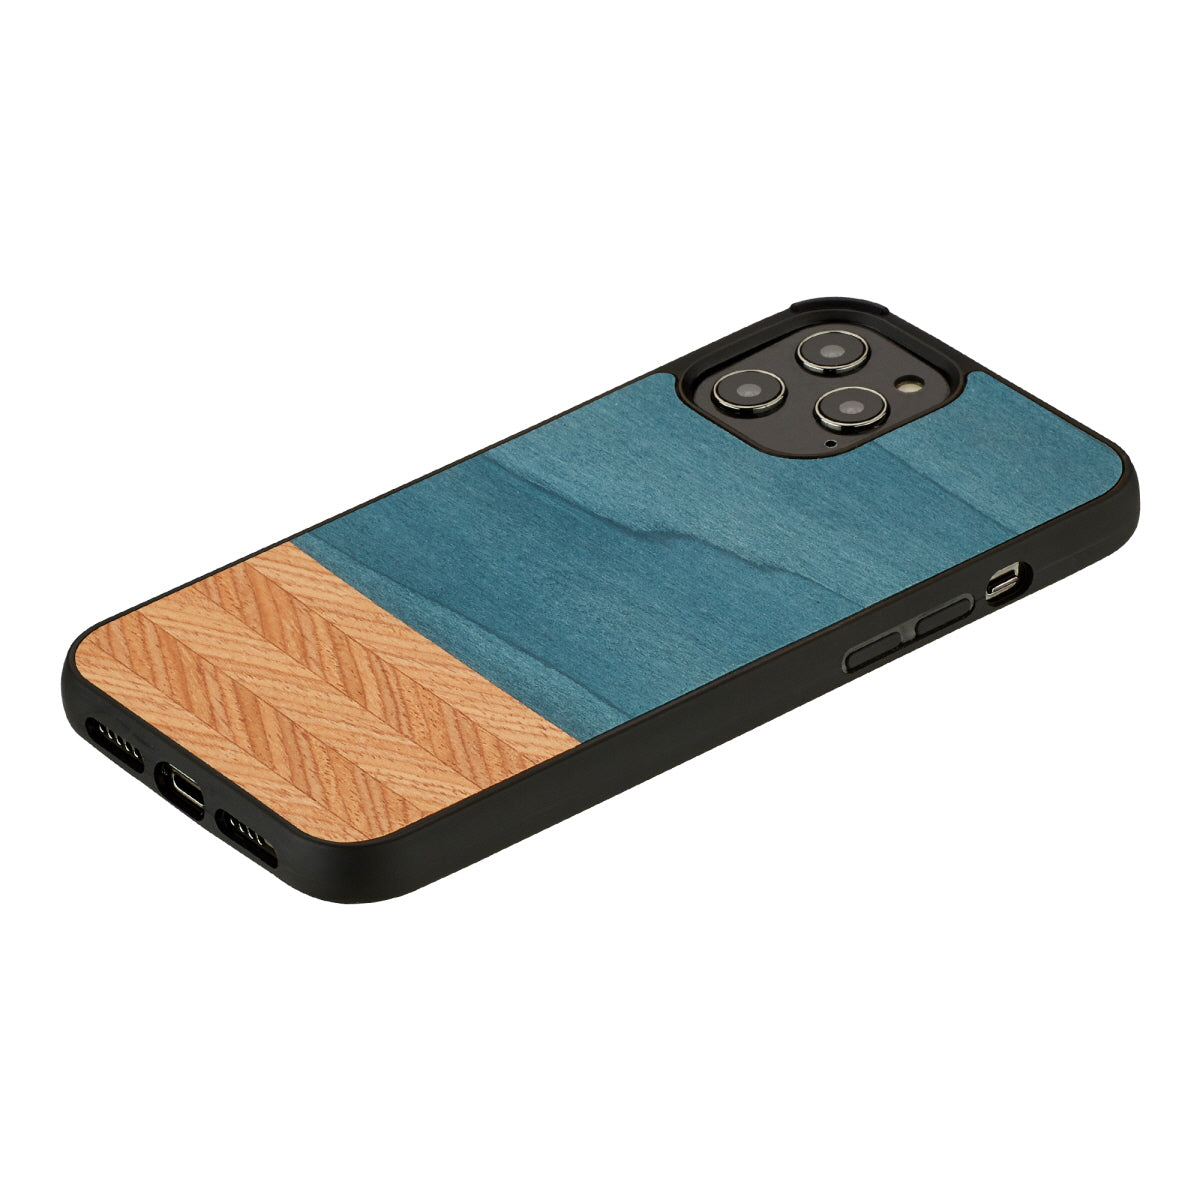 Man & Wood Case For iPhone 12 Pro Max - Denim